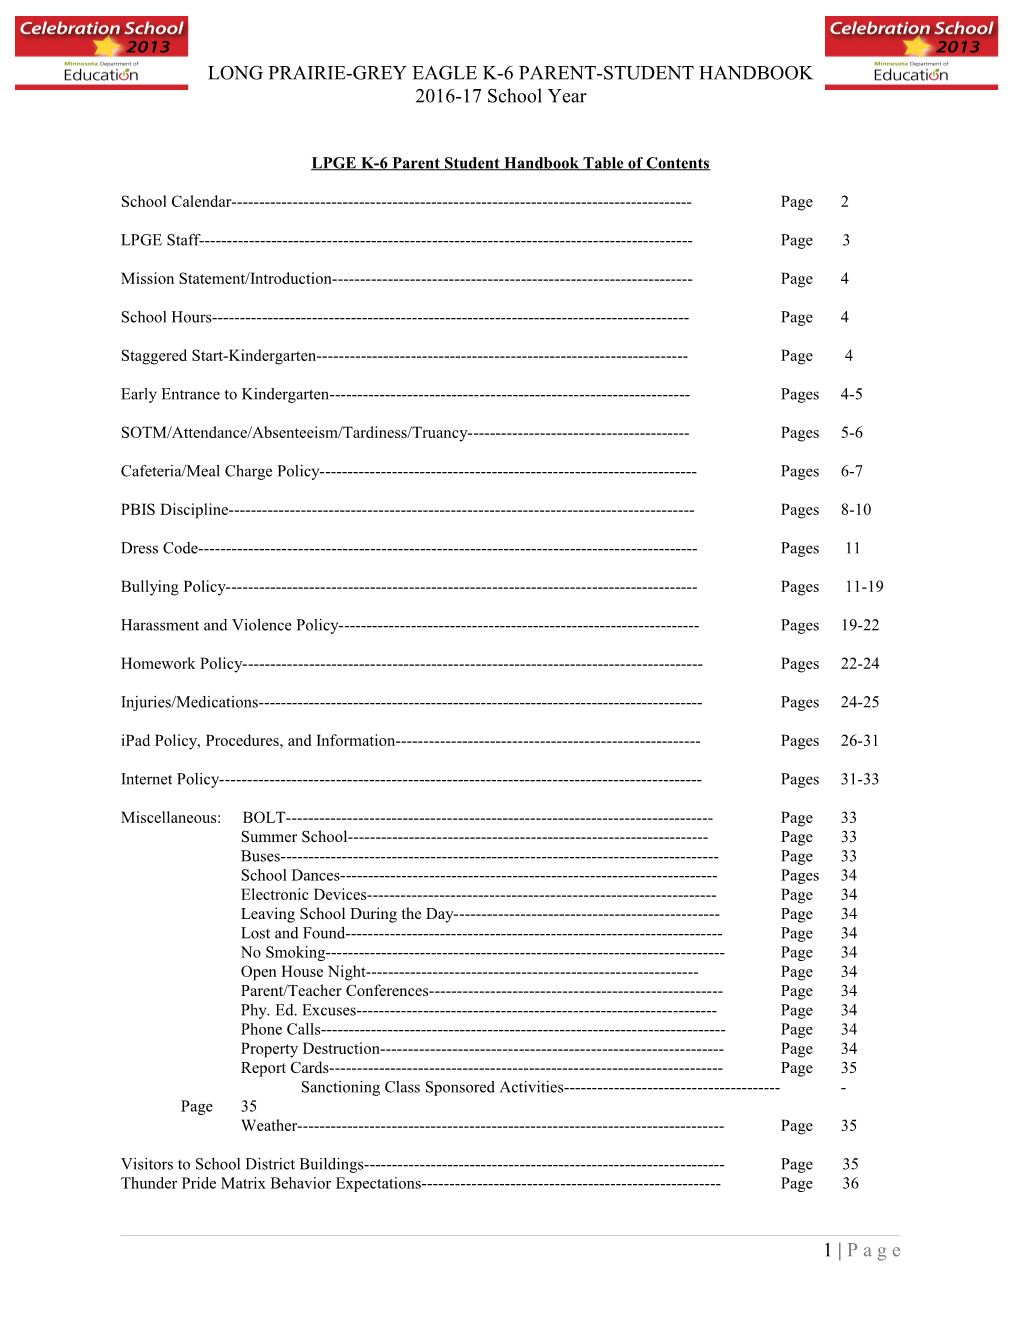 LPGE K-6 Parent Student Handbook Table of Contents